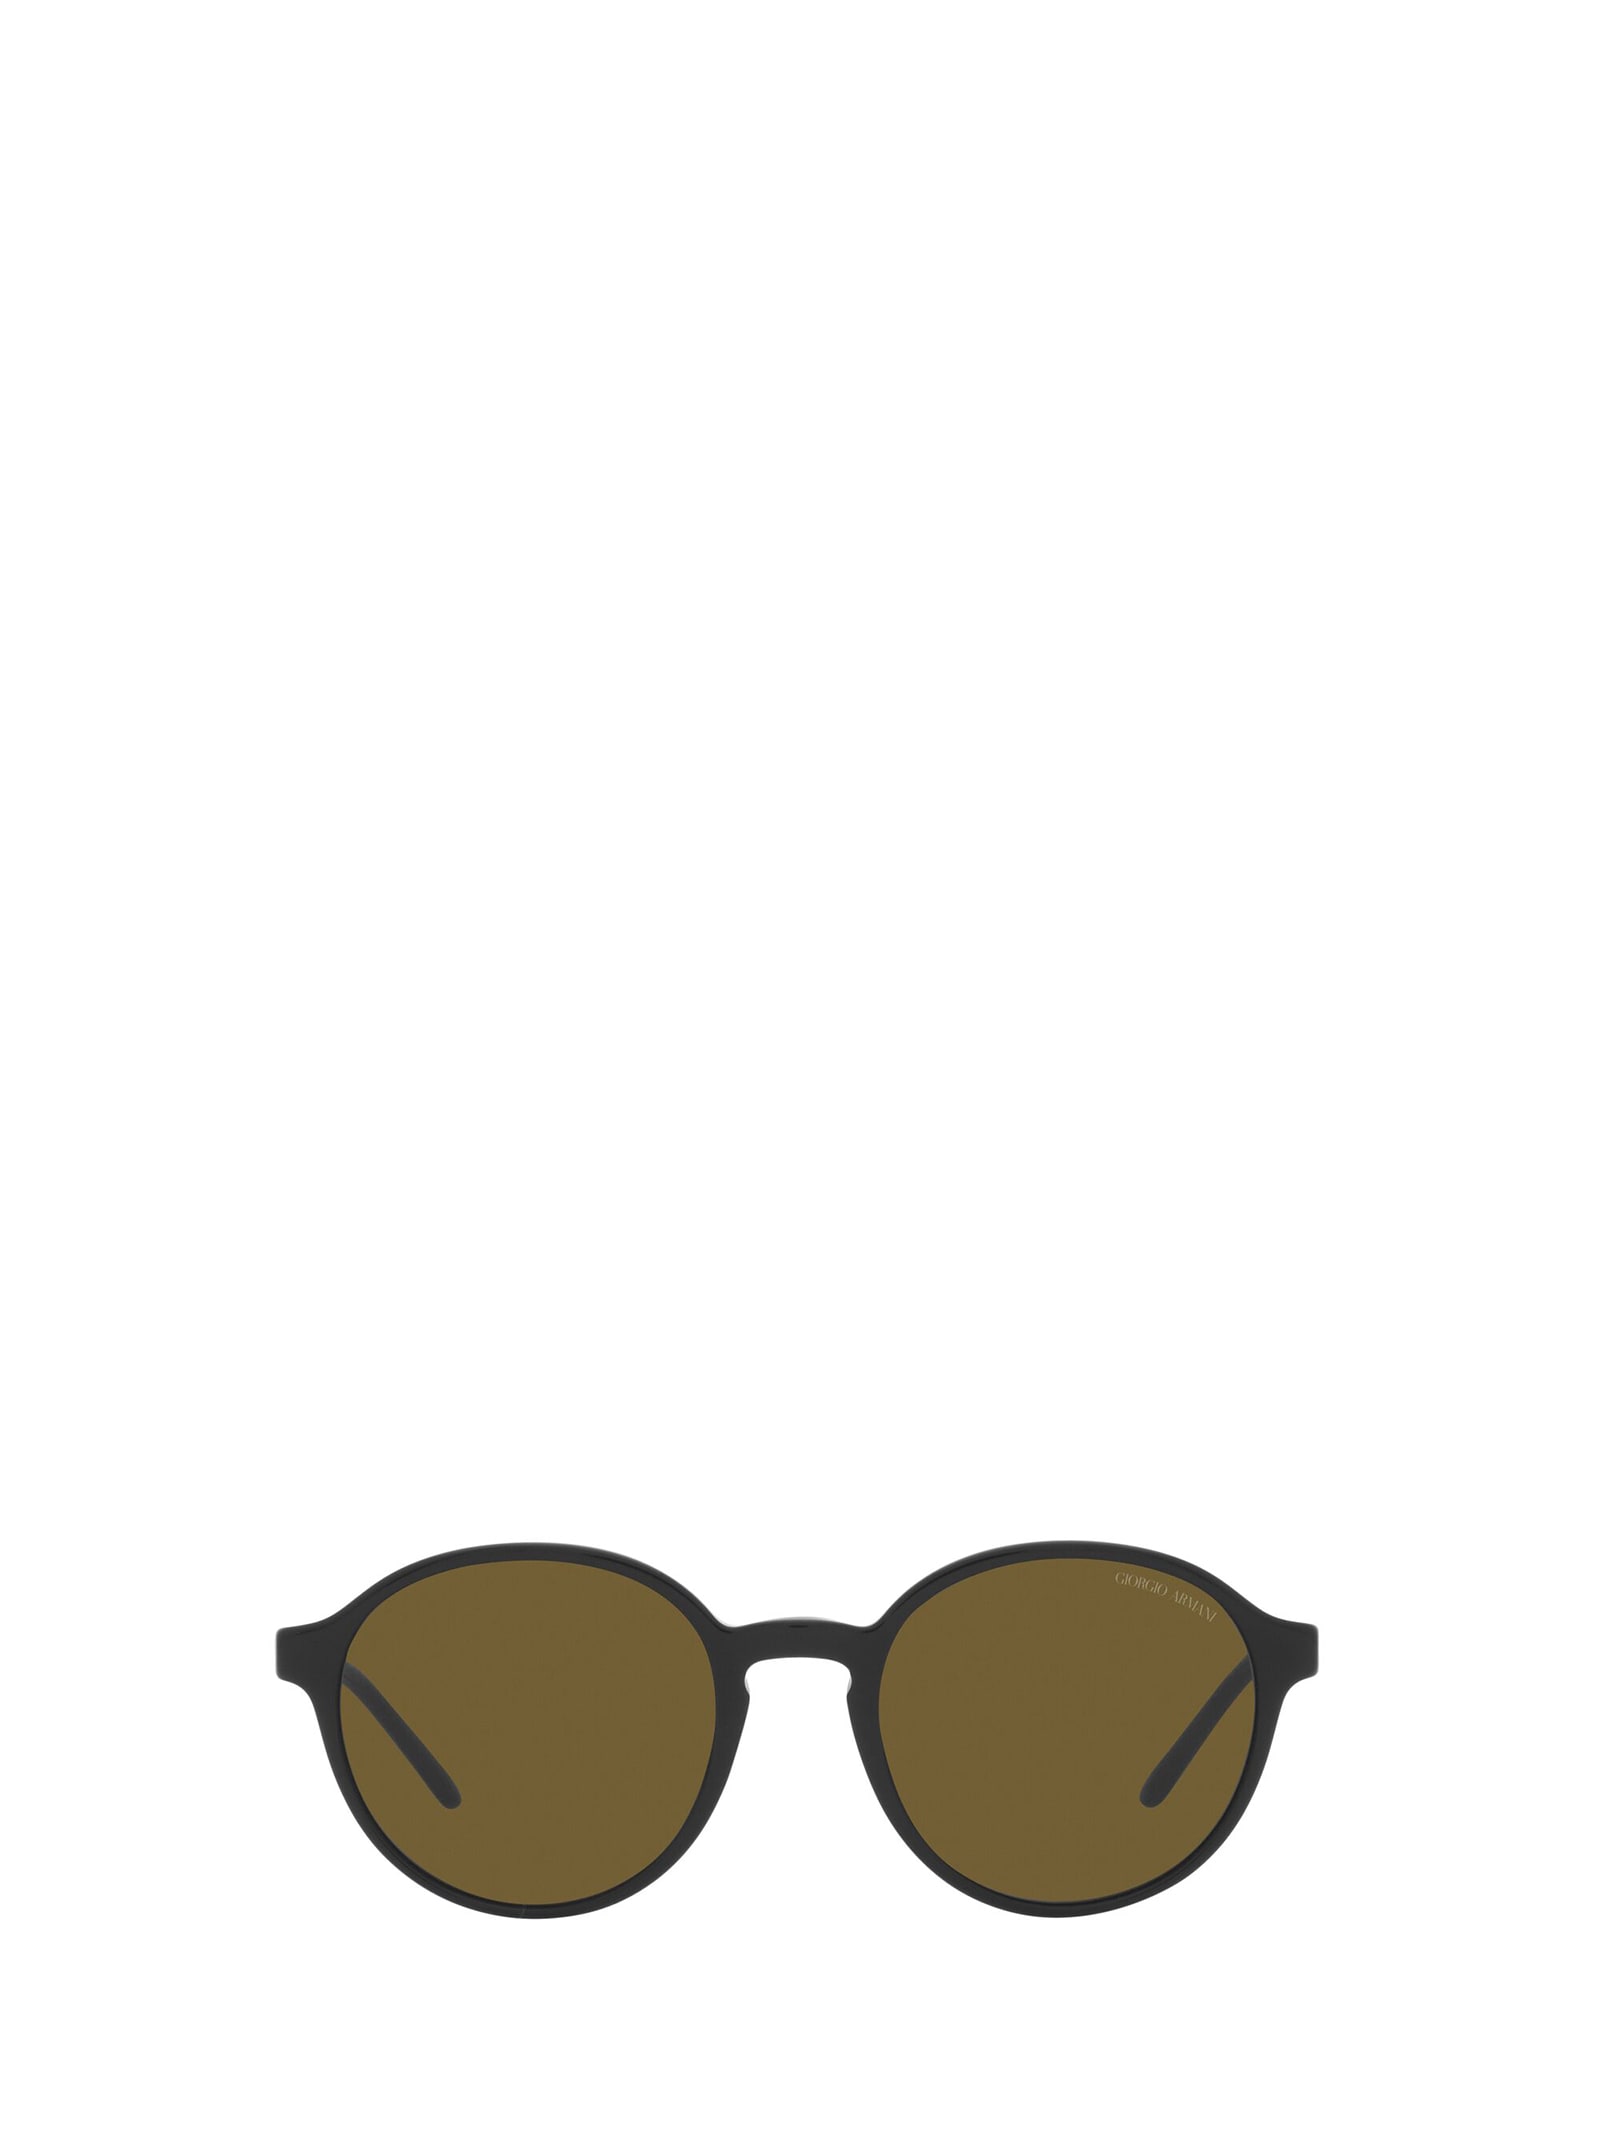 Giorgio Armani Ar8160 Black Sunglasses